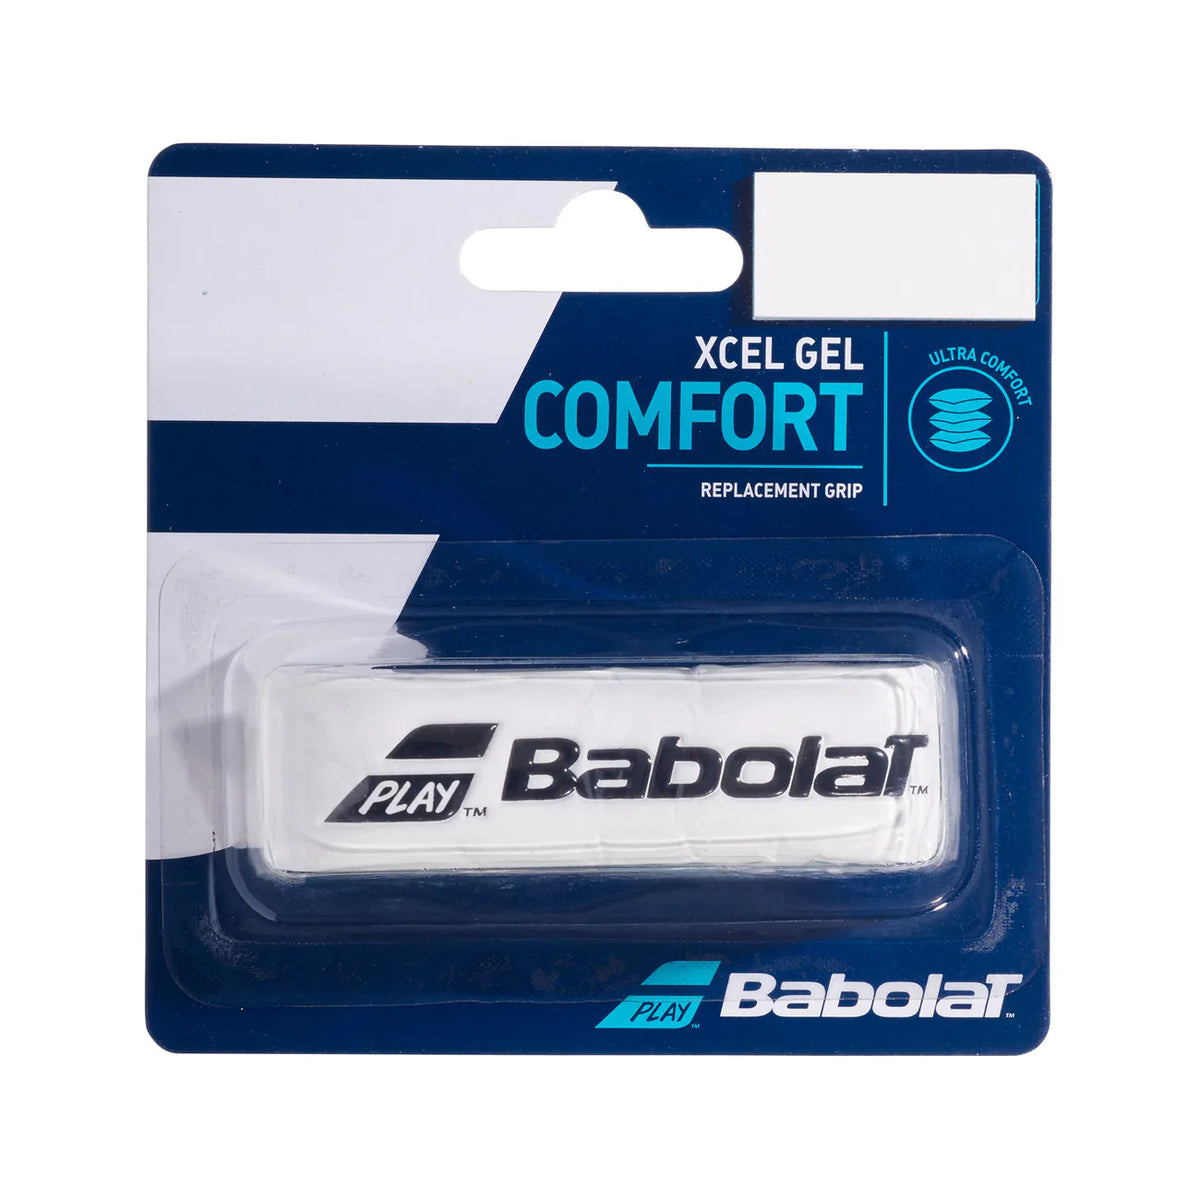 Babolat Xcel Gel Comfort Tennis Grips (Single) White